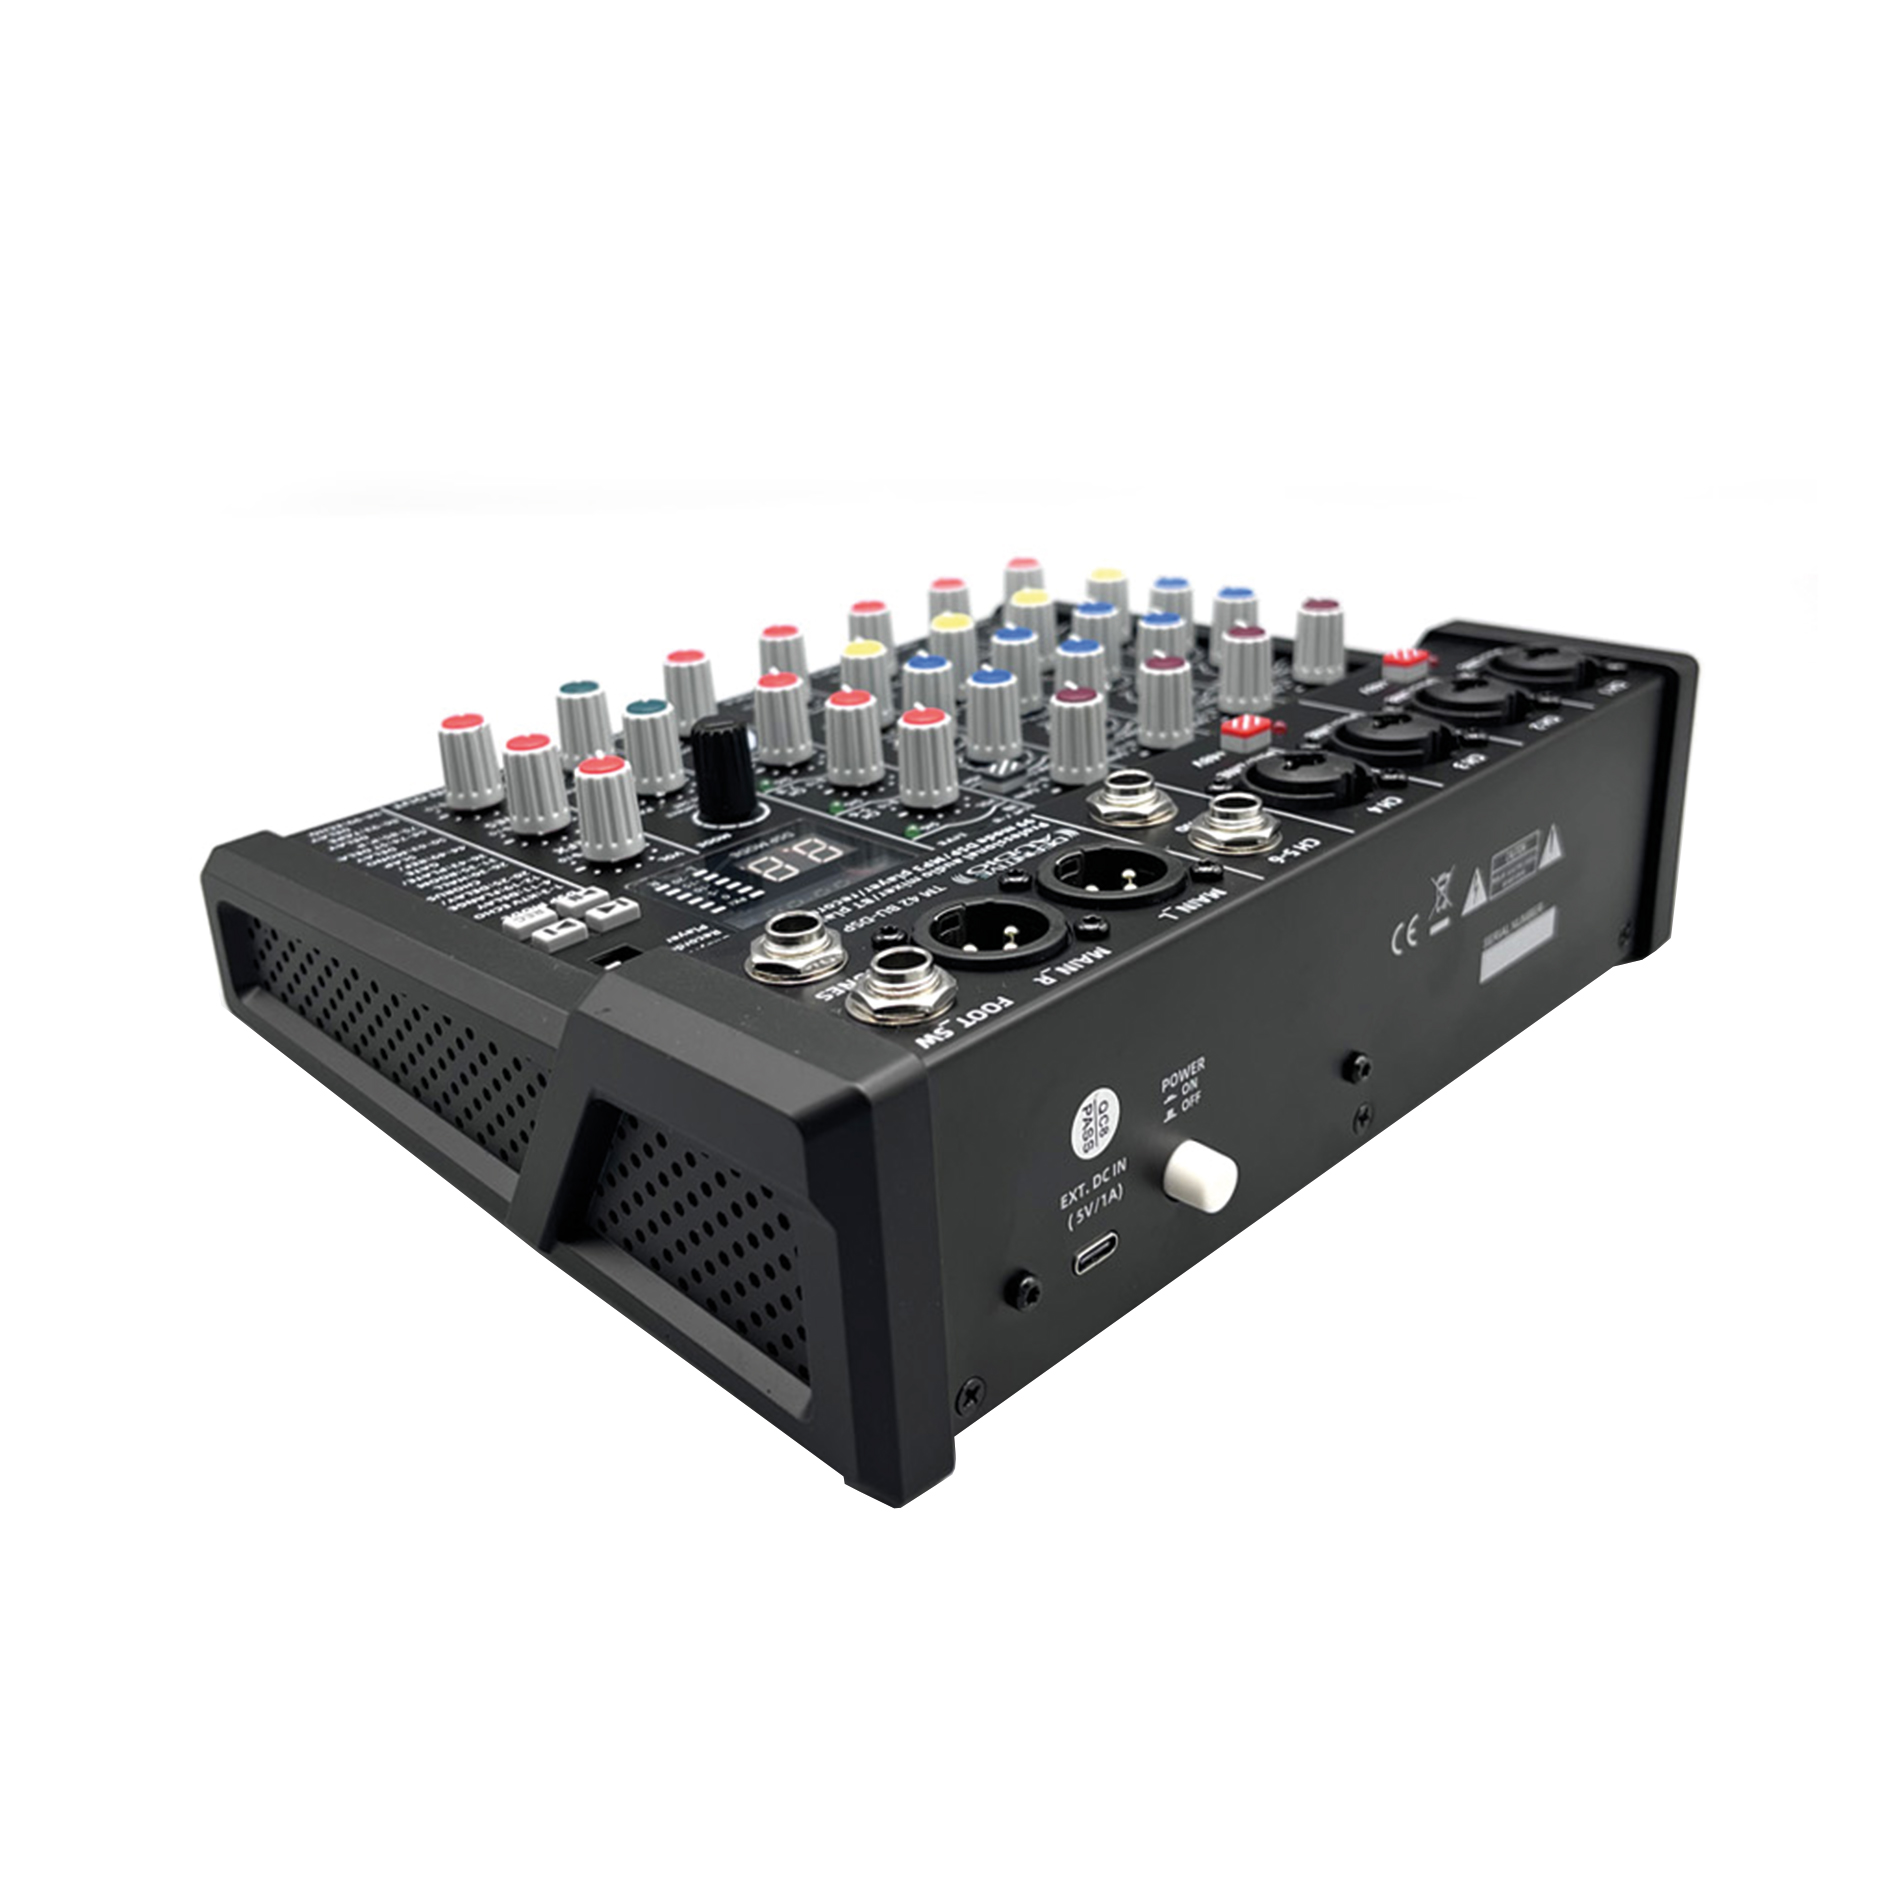 Definitive Audio Tm 42 Bu-dsp - Mesa de mezcla analógica - Variation 4